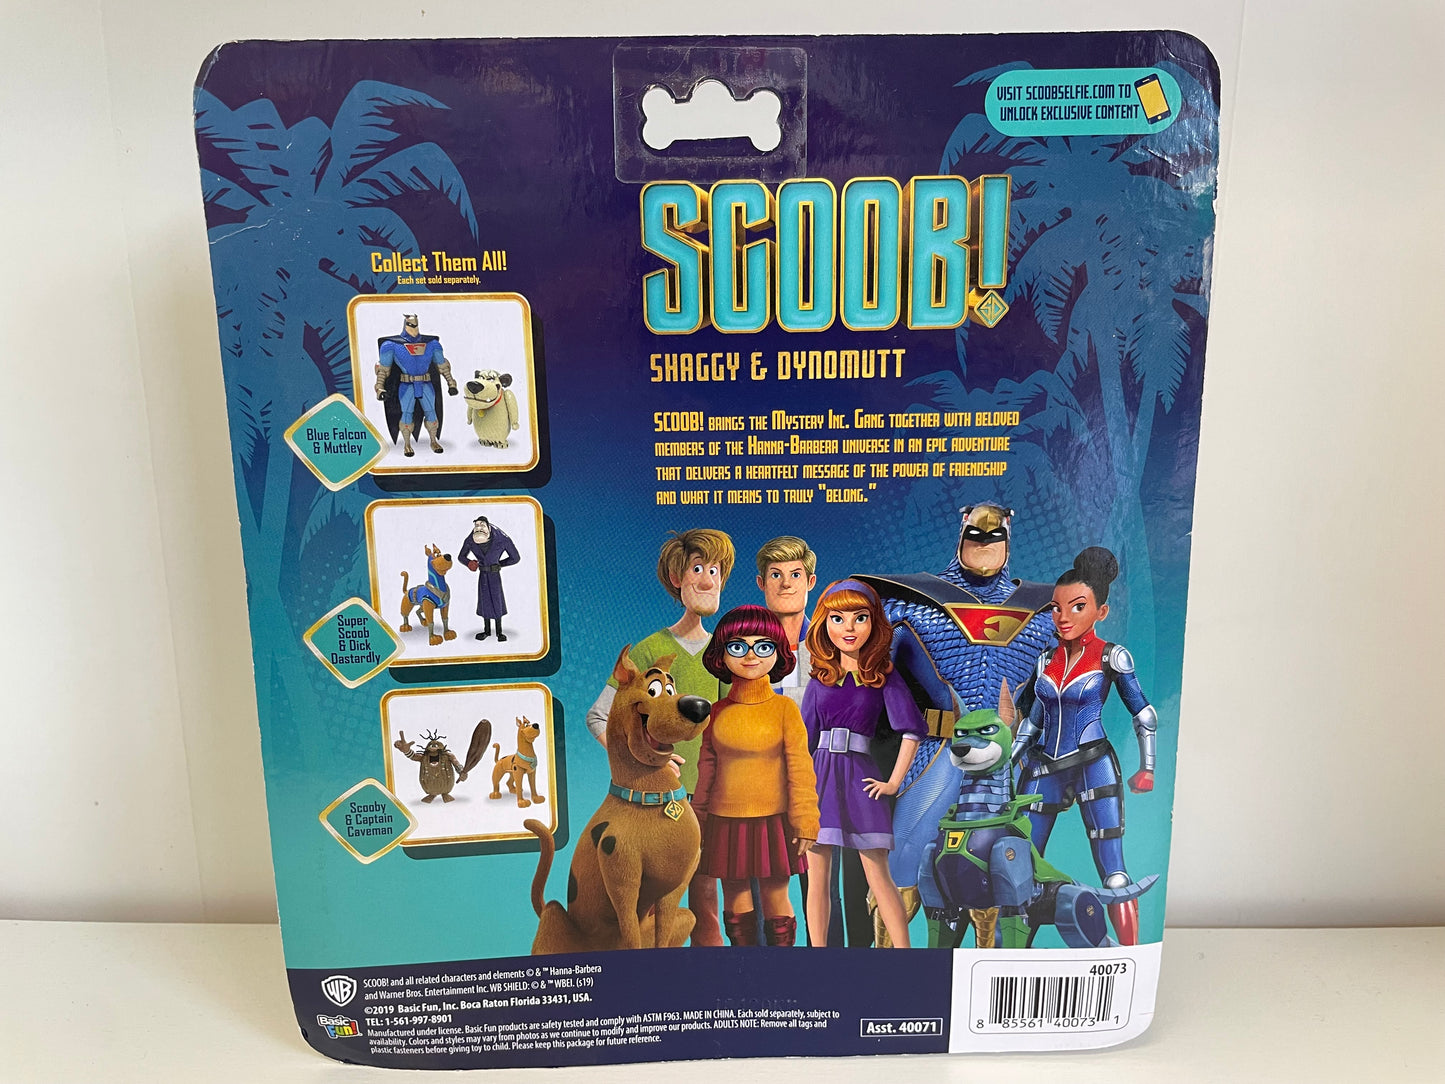 Scoob! Scooby Doo shaggy & dynomutt